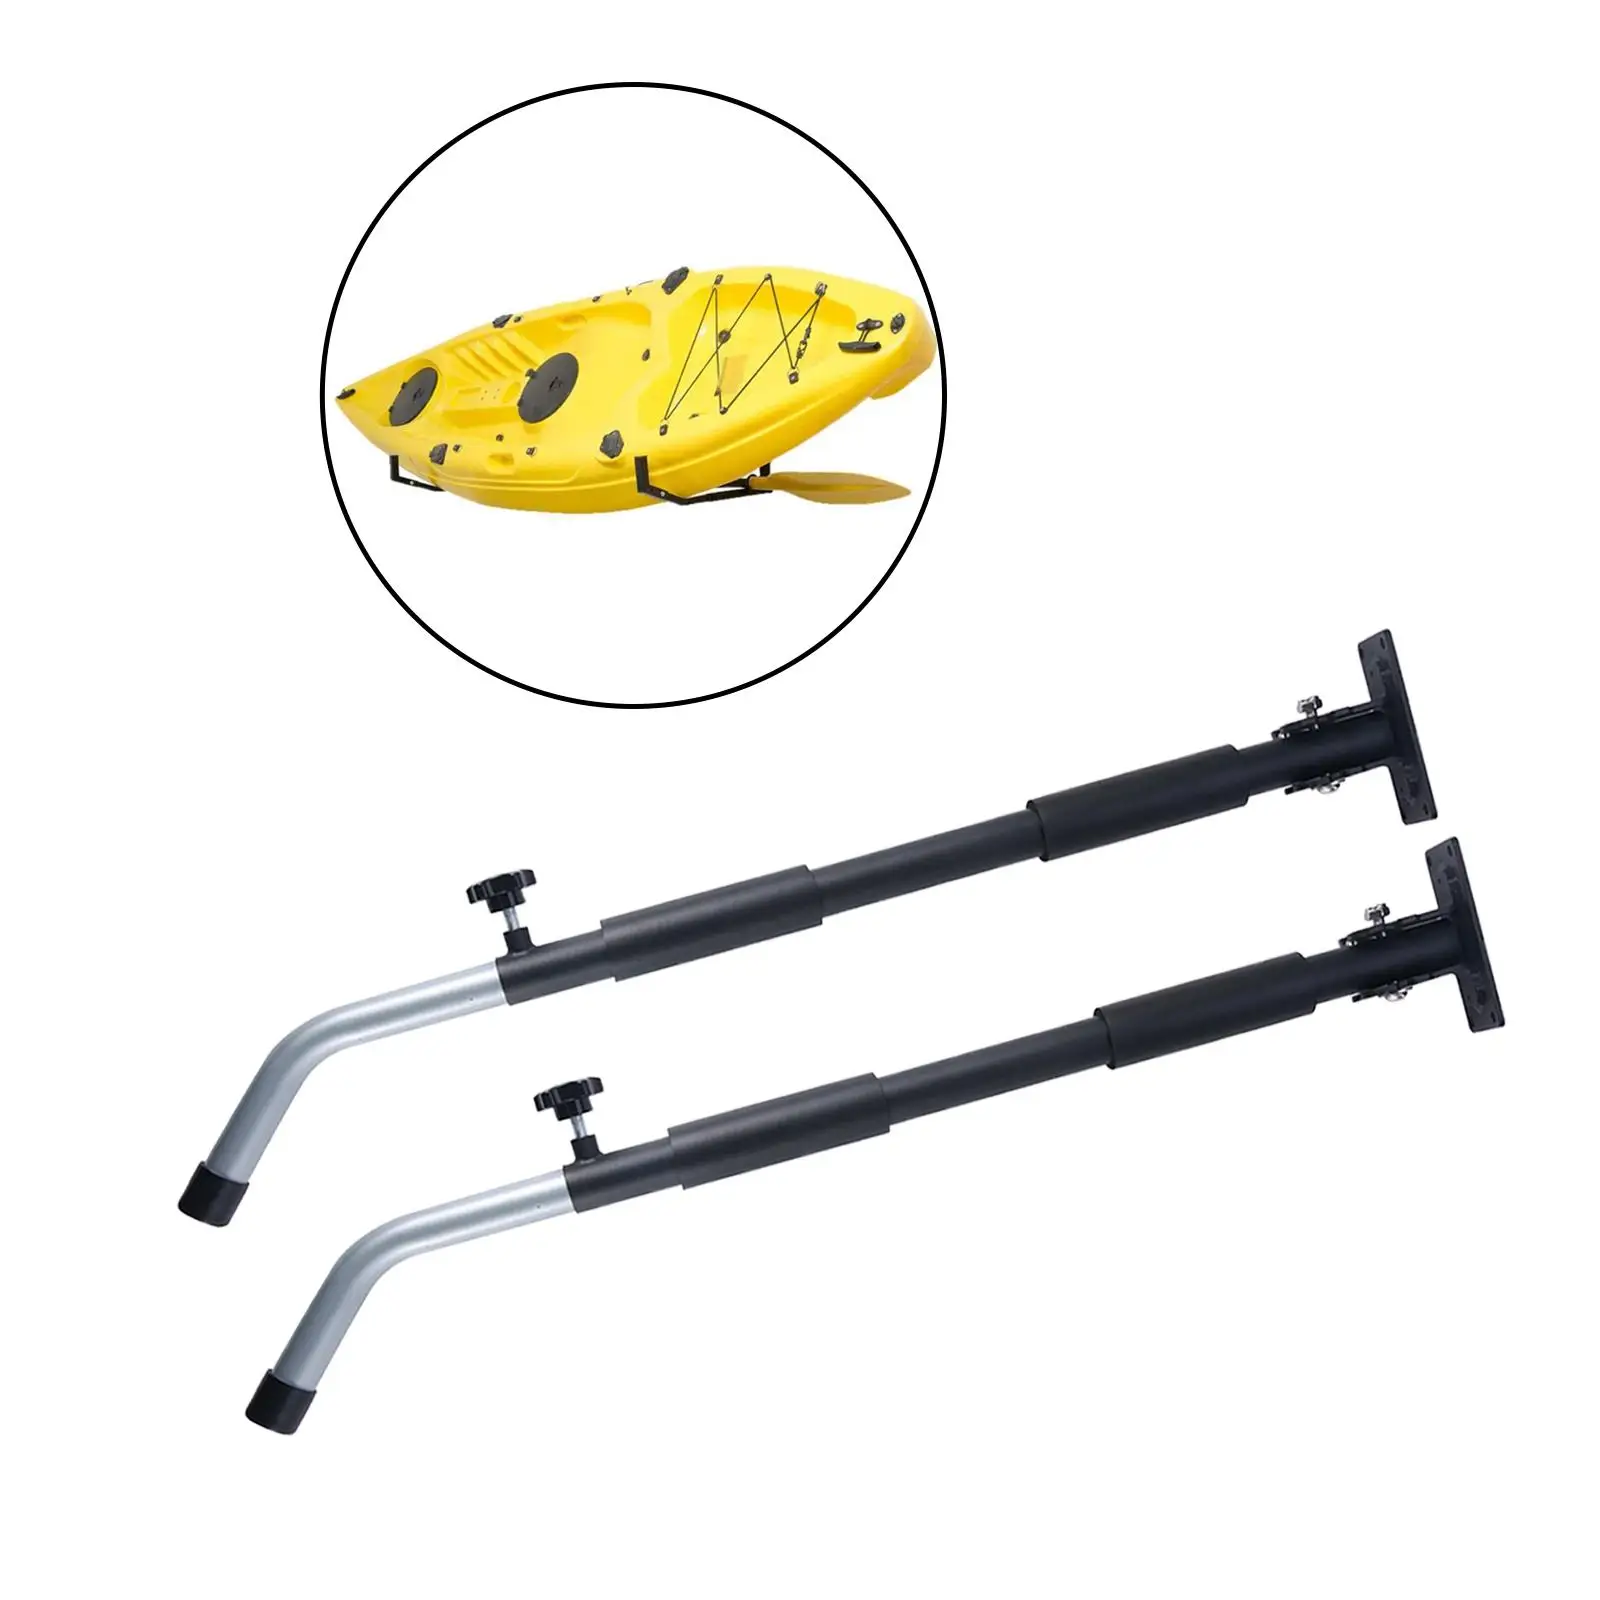 Kayak Storage Rack Wall Mounted Hanger Paddle Holder Adjustable for Outdoor